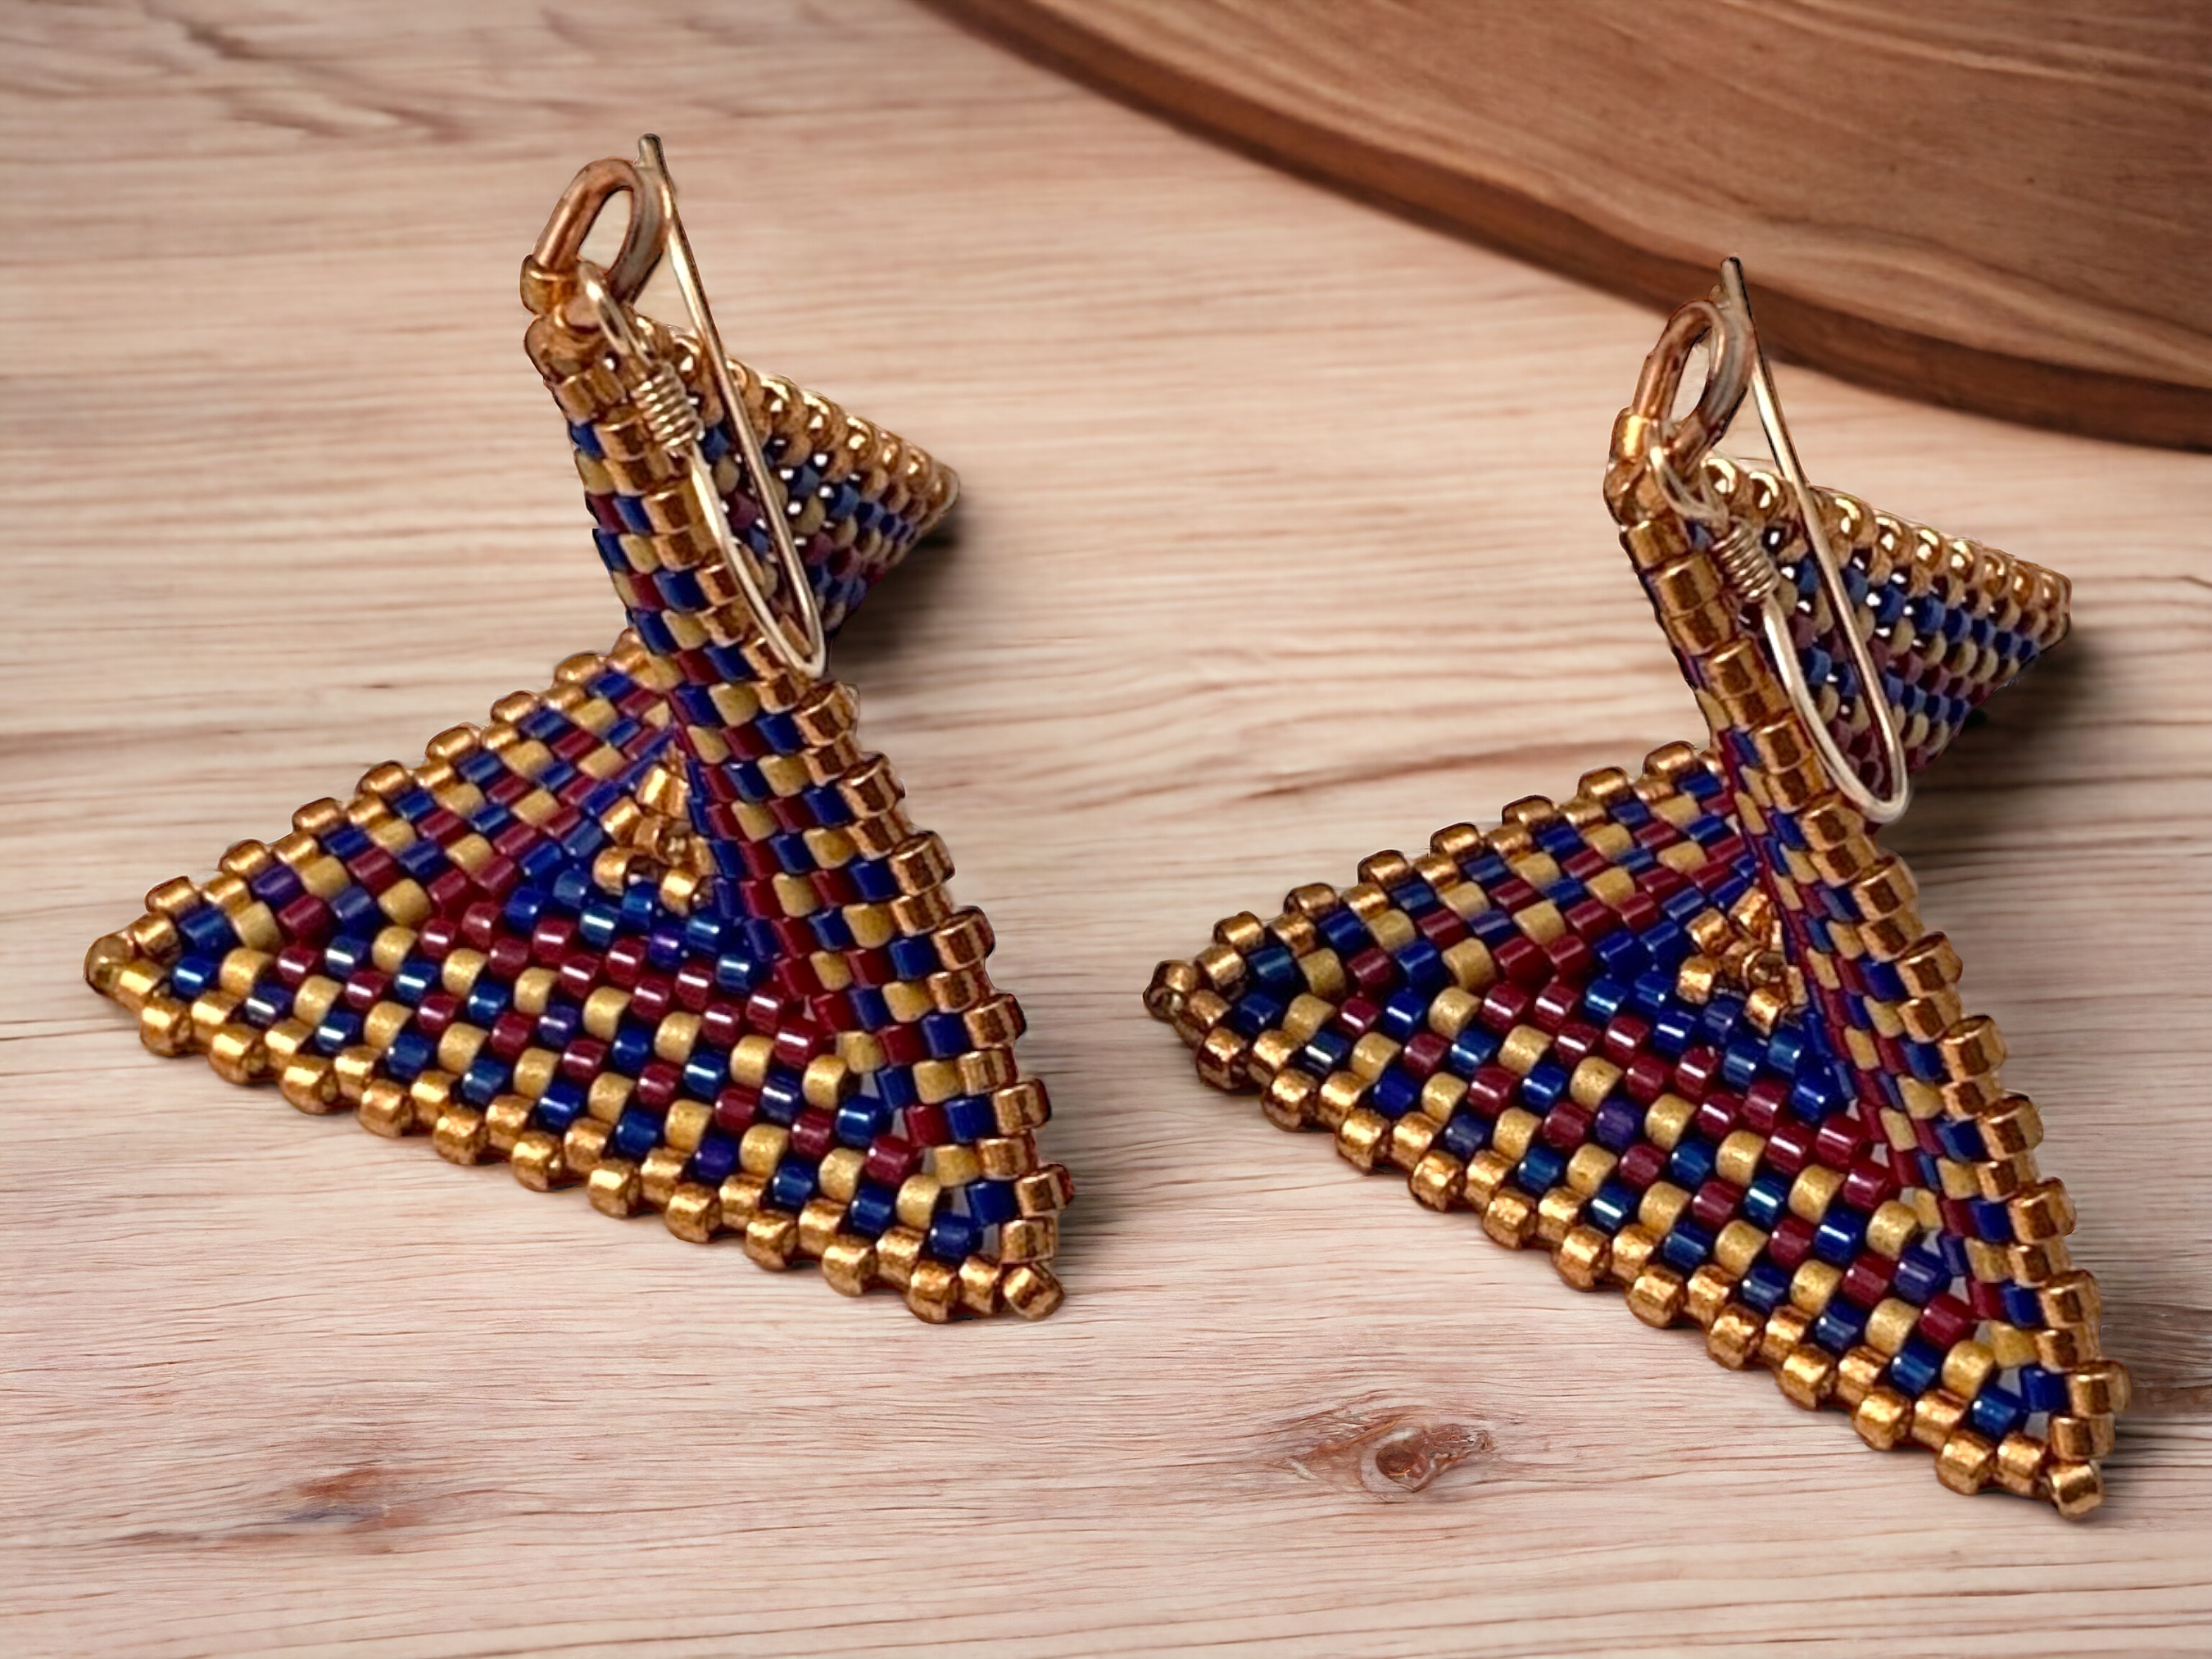 Geometric Beadwork Earrings in Spanish Tile Colors